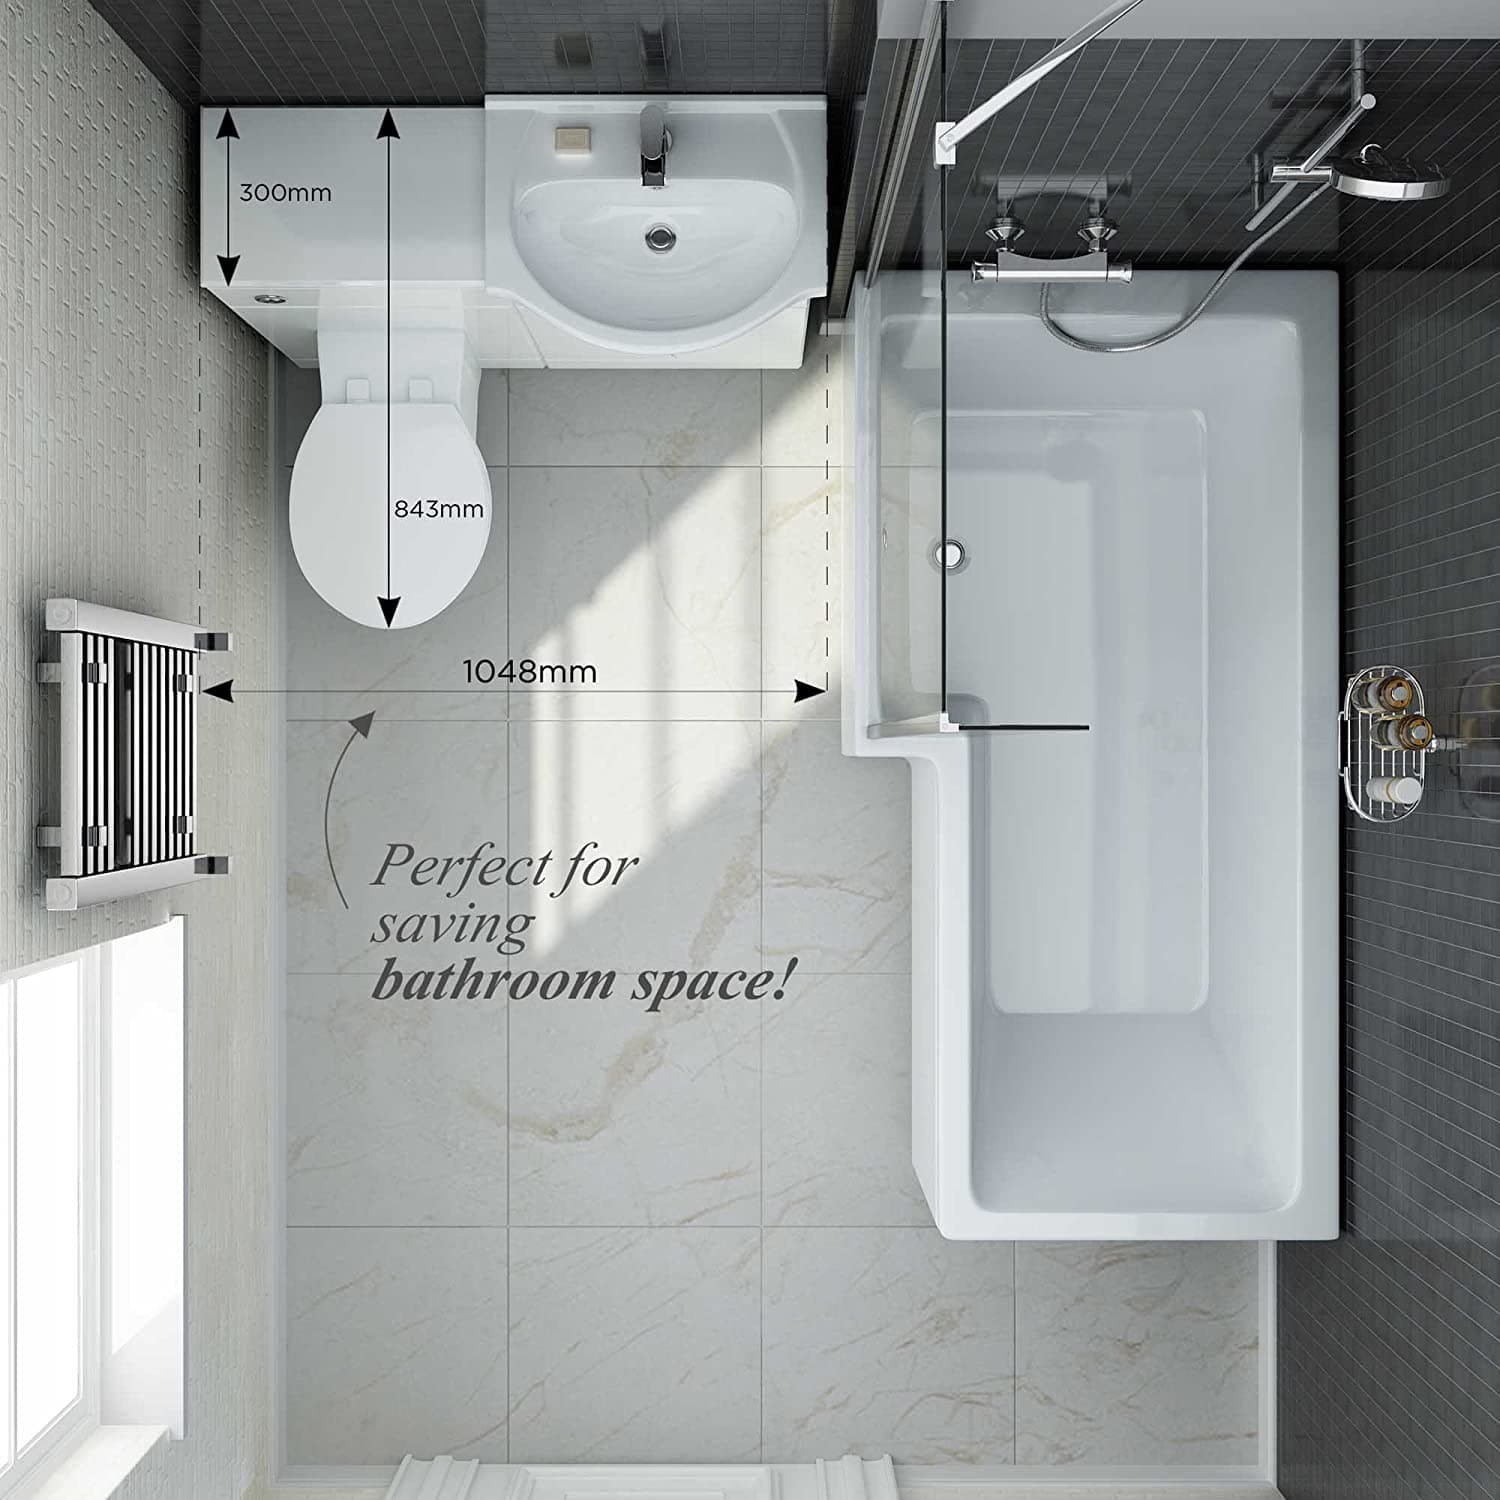 Quartz Modern Bathroom Combination Set - (Toilet, Seat, Vanity Unit and Basin) - Gloss White